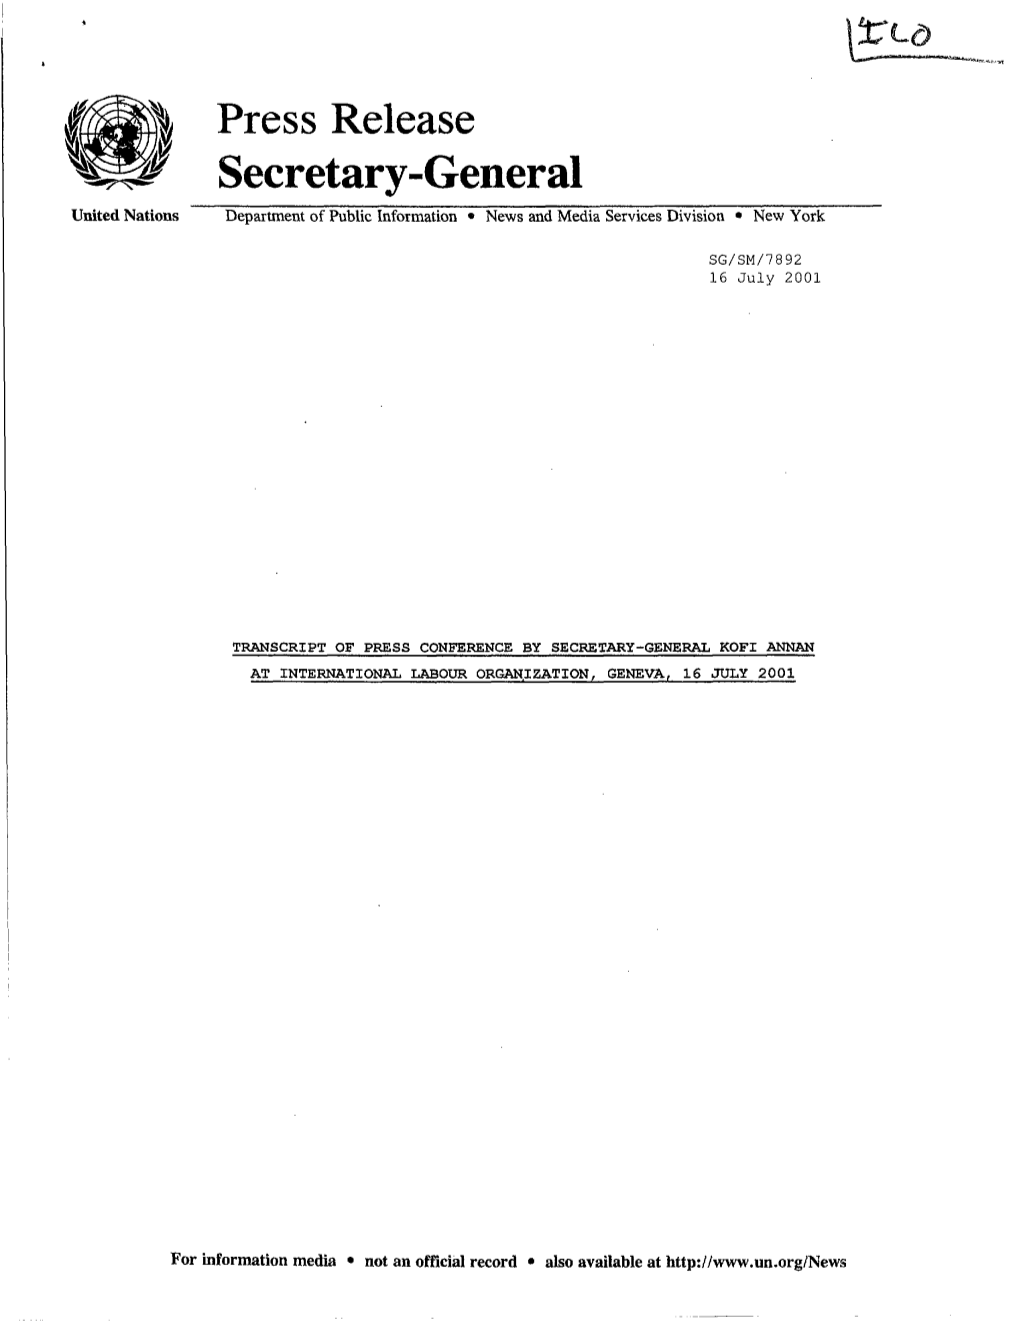 Press Release & Secretary-General